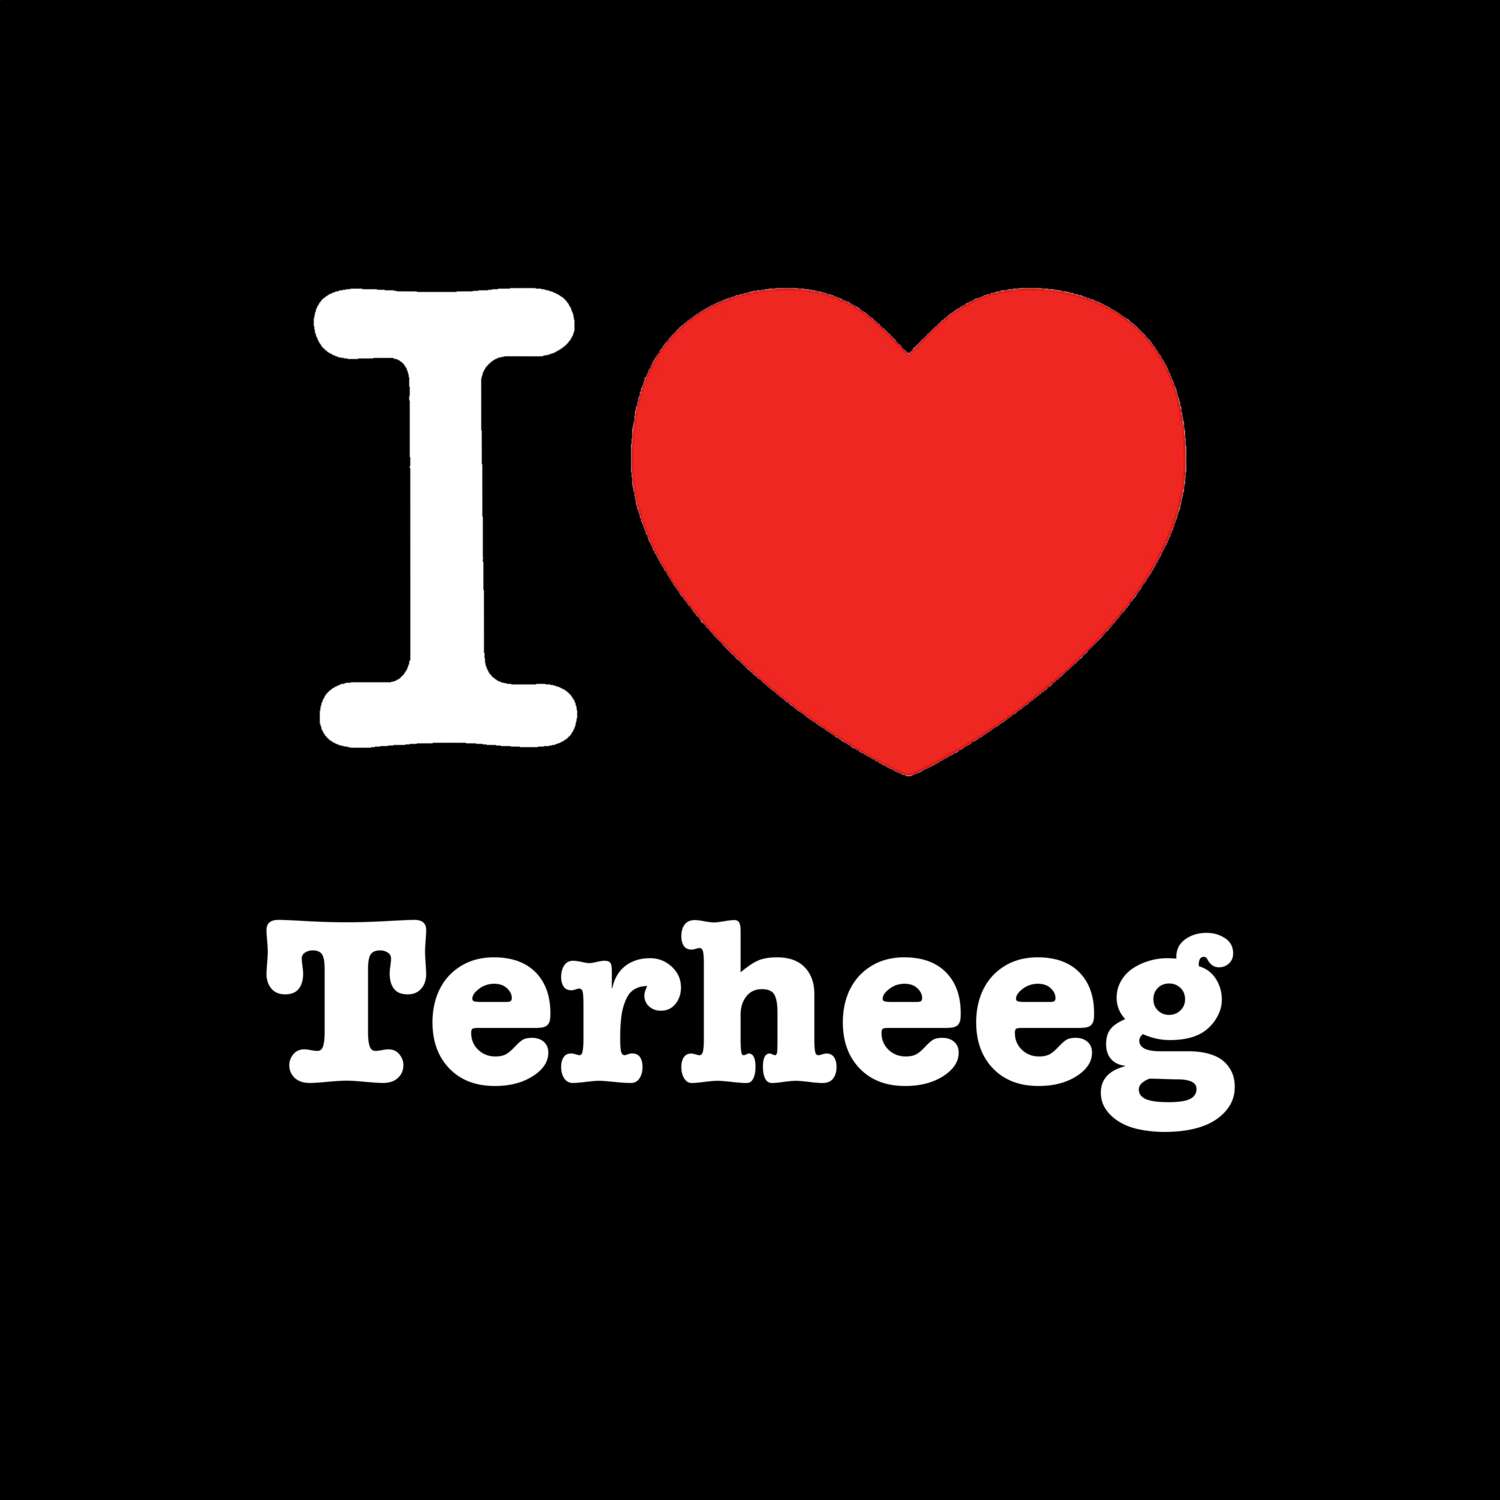 Terheeg T-Shirt »I love«